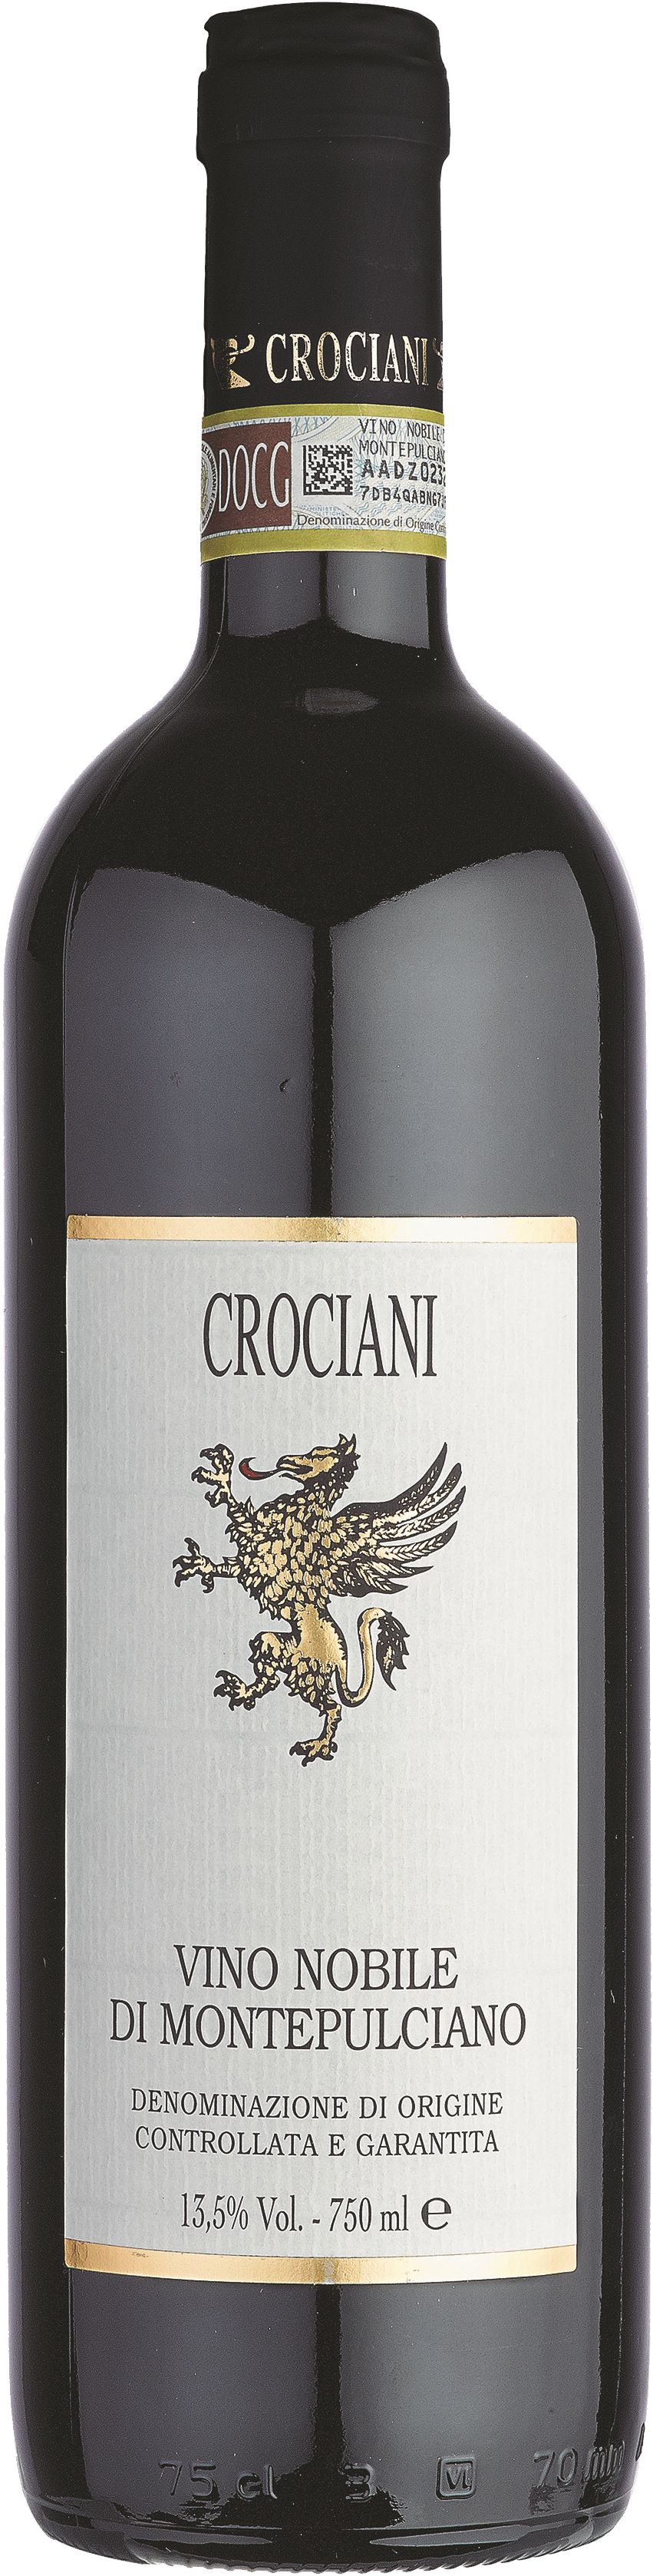 Crociani Vino Nobile di Montepulciano DOCG 2020